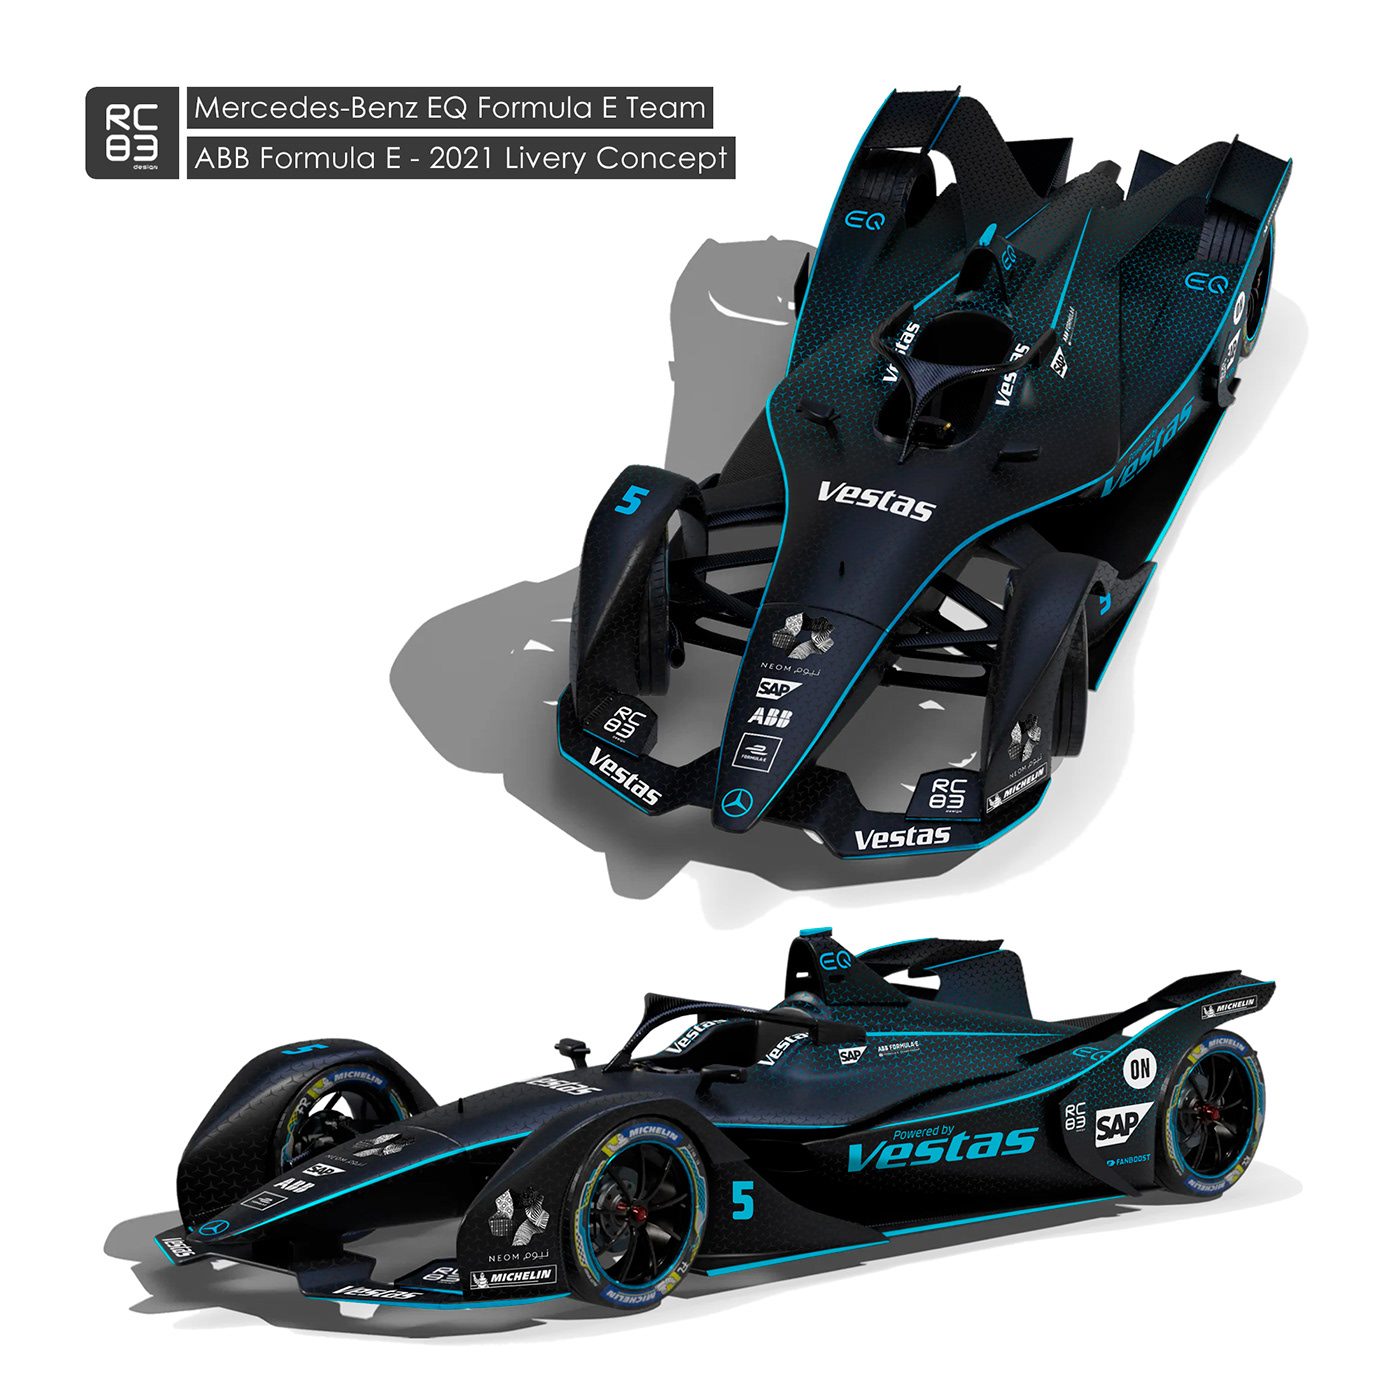 Automotive design car design formula Formulae Livery livery concept Motor racing Motorsport Racing rc83design